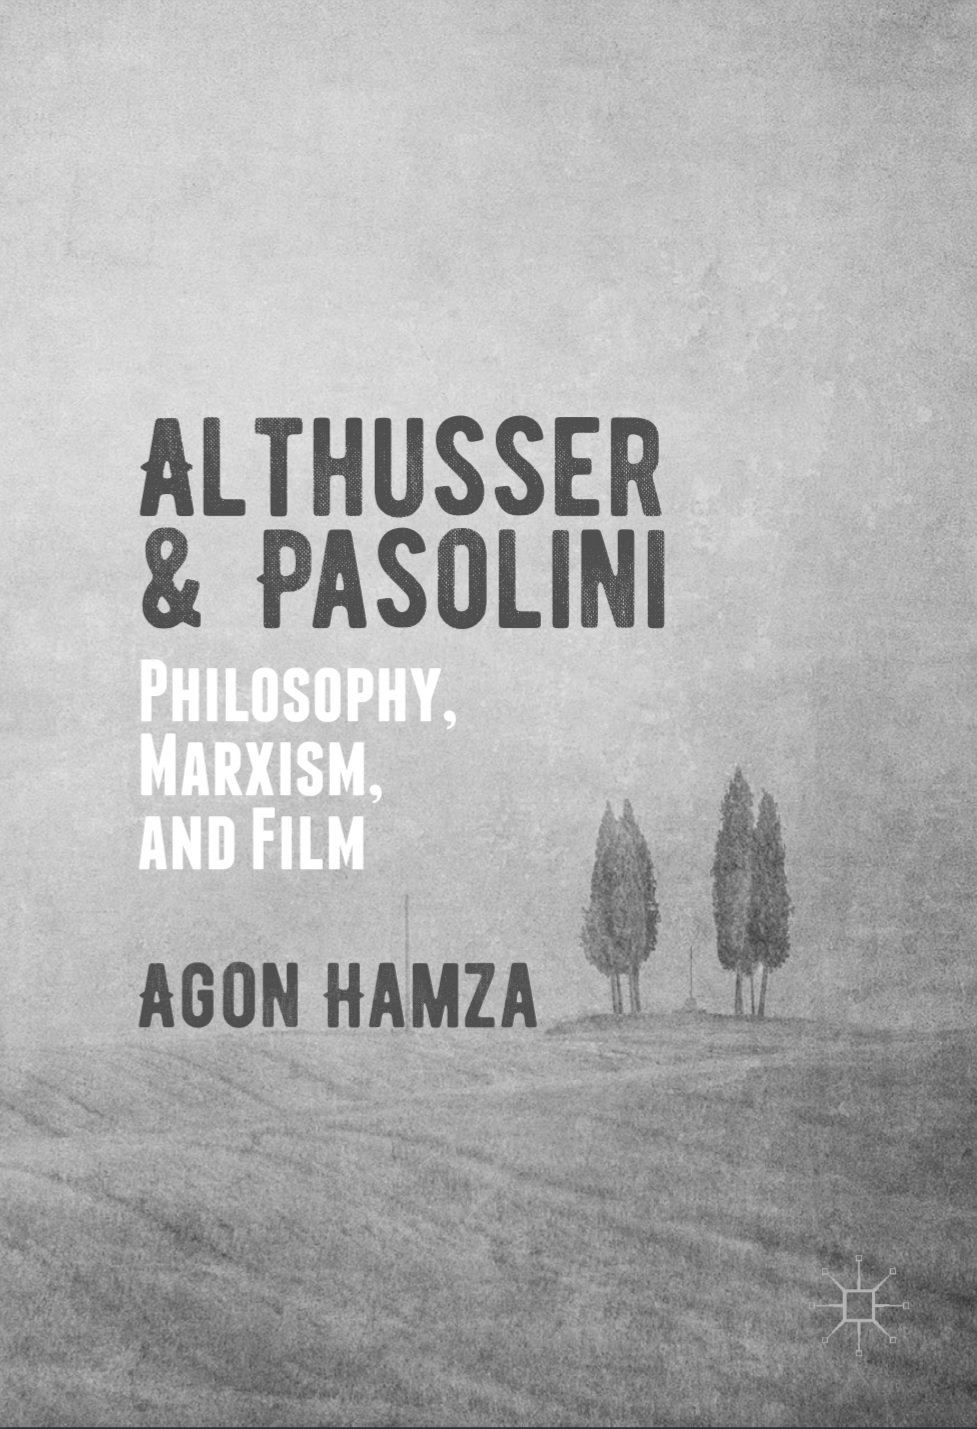 Agon-hamza-althusser-and-pasolini-philosophy-marxism-film-theoryleaks.jpg